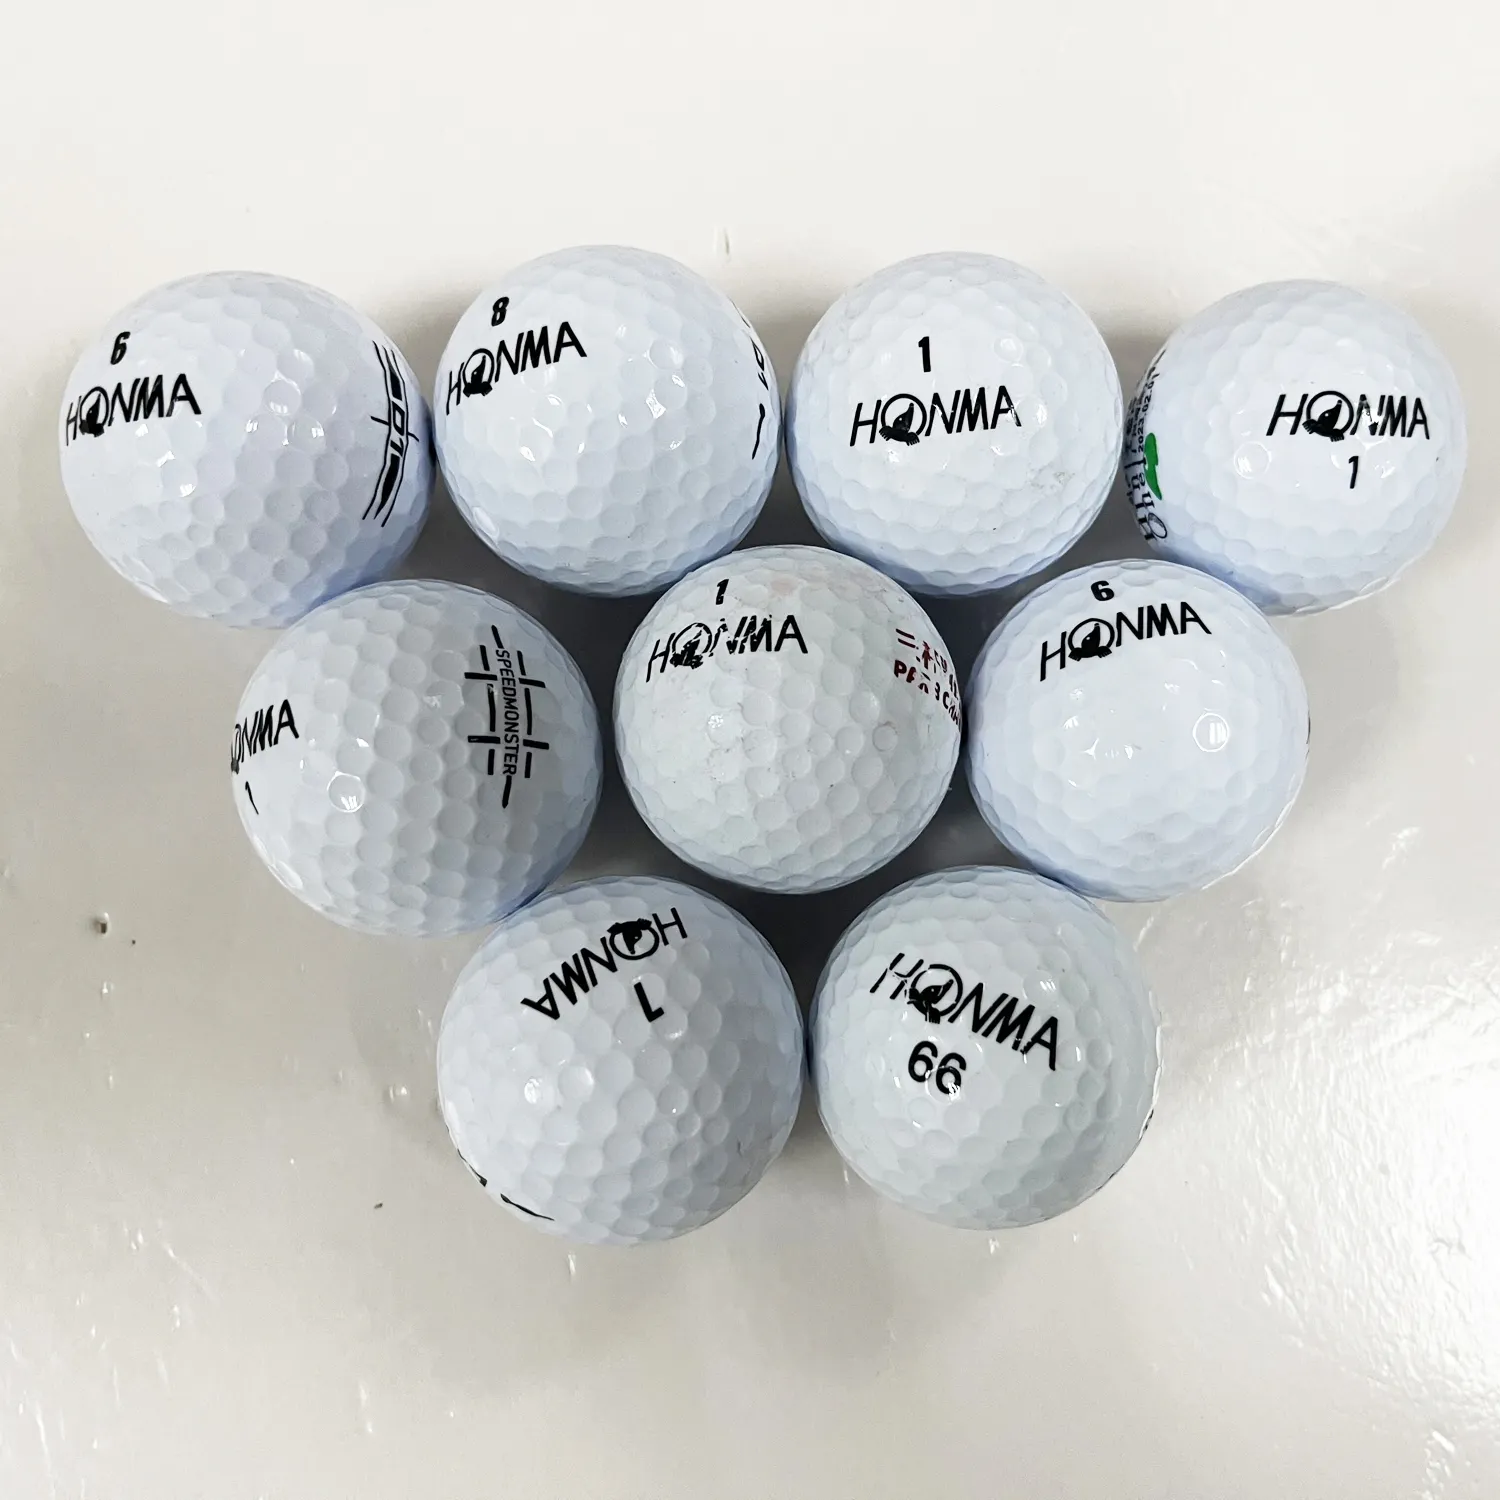 Cheap Bulk Golfballs Great for Beginners and Golf Swing Practice,Hit Away Practice Range Shag Used Golf Balls